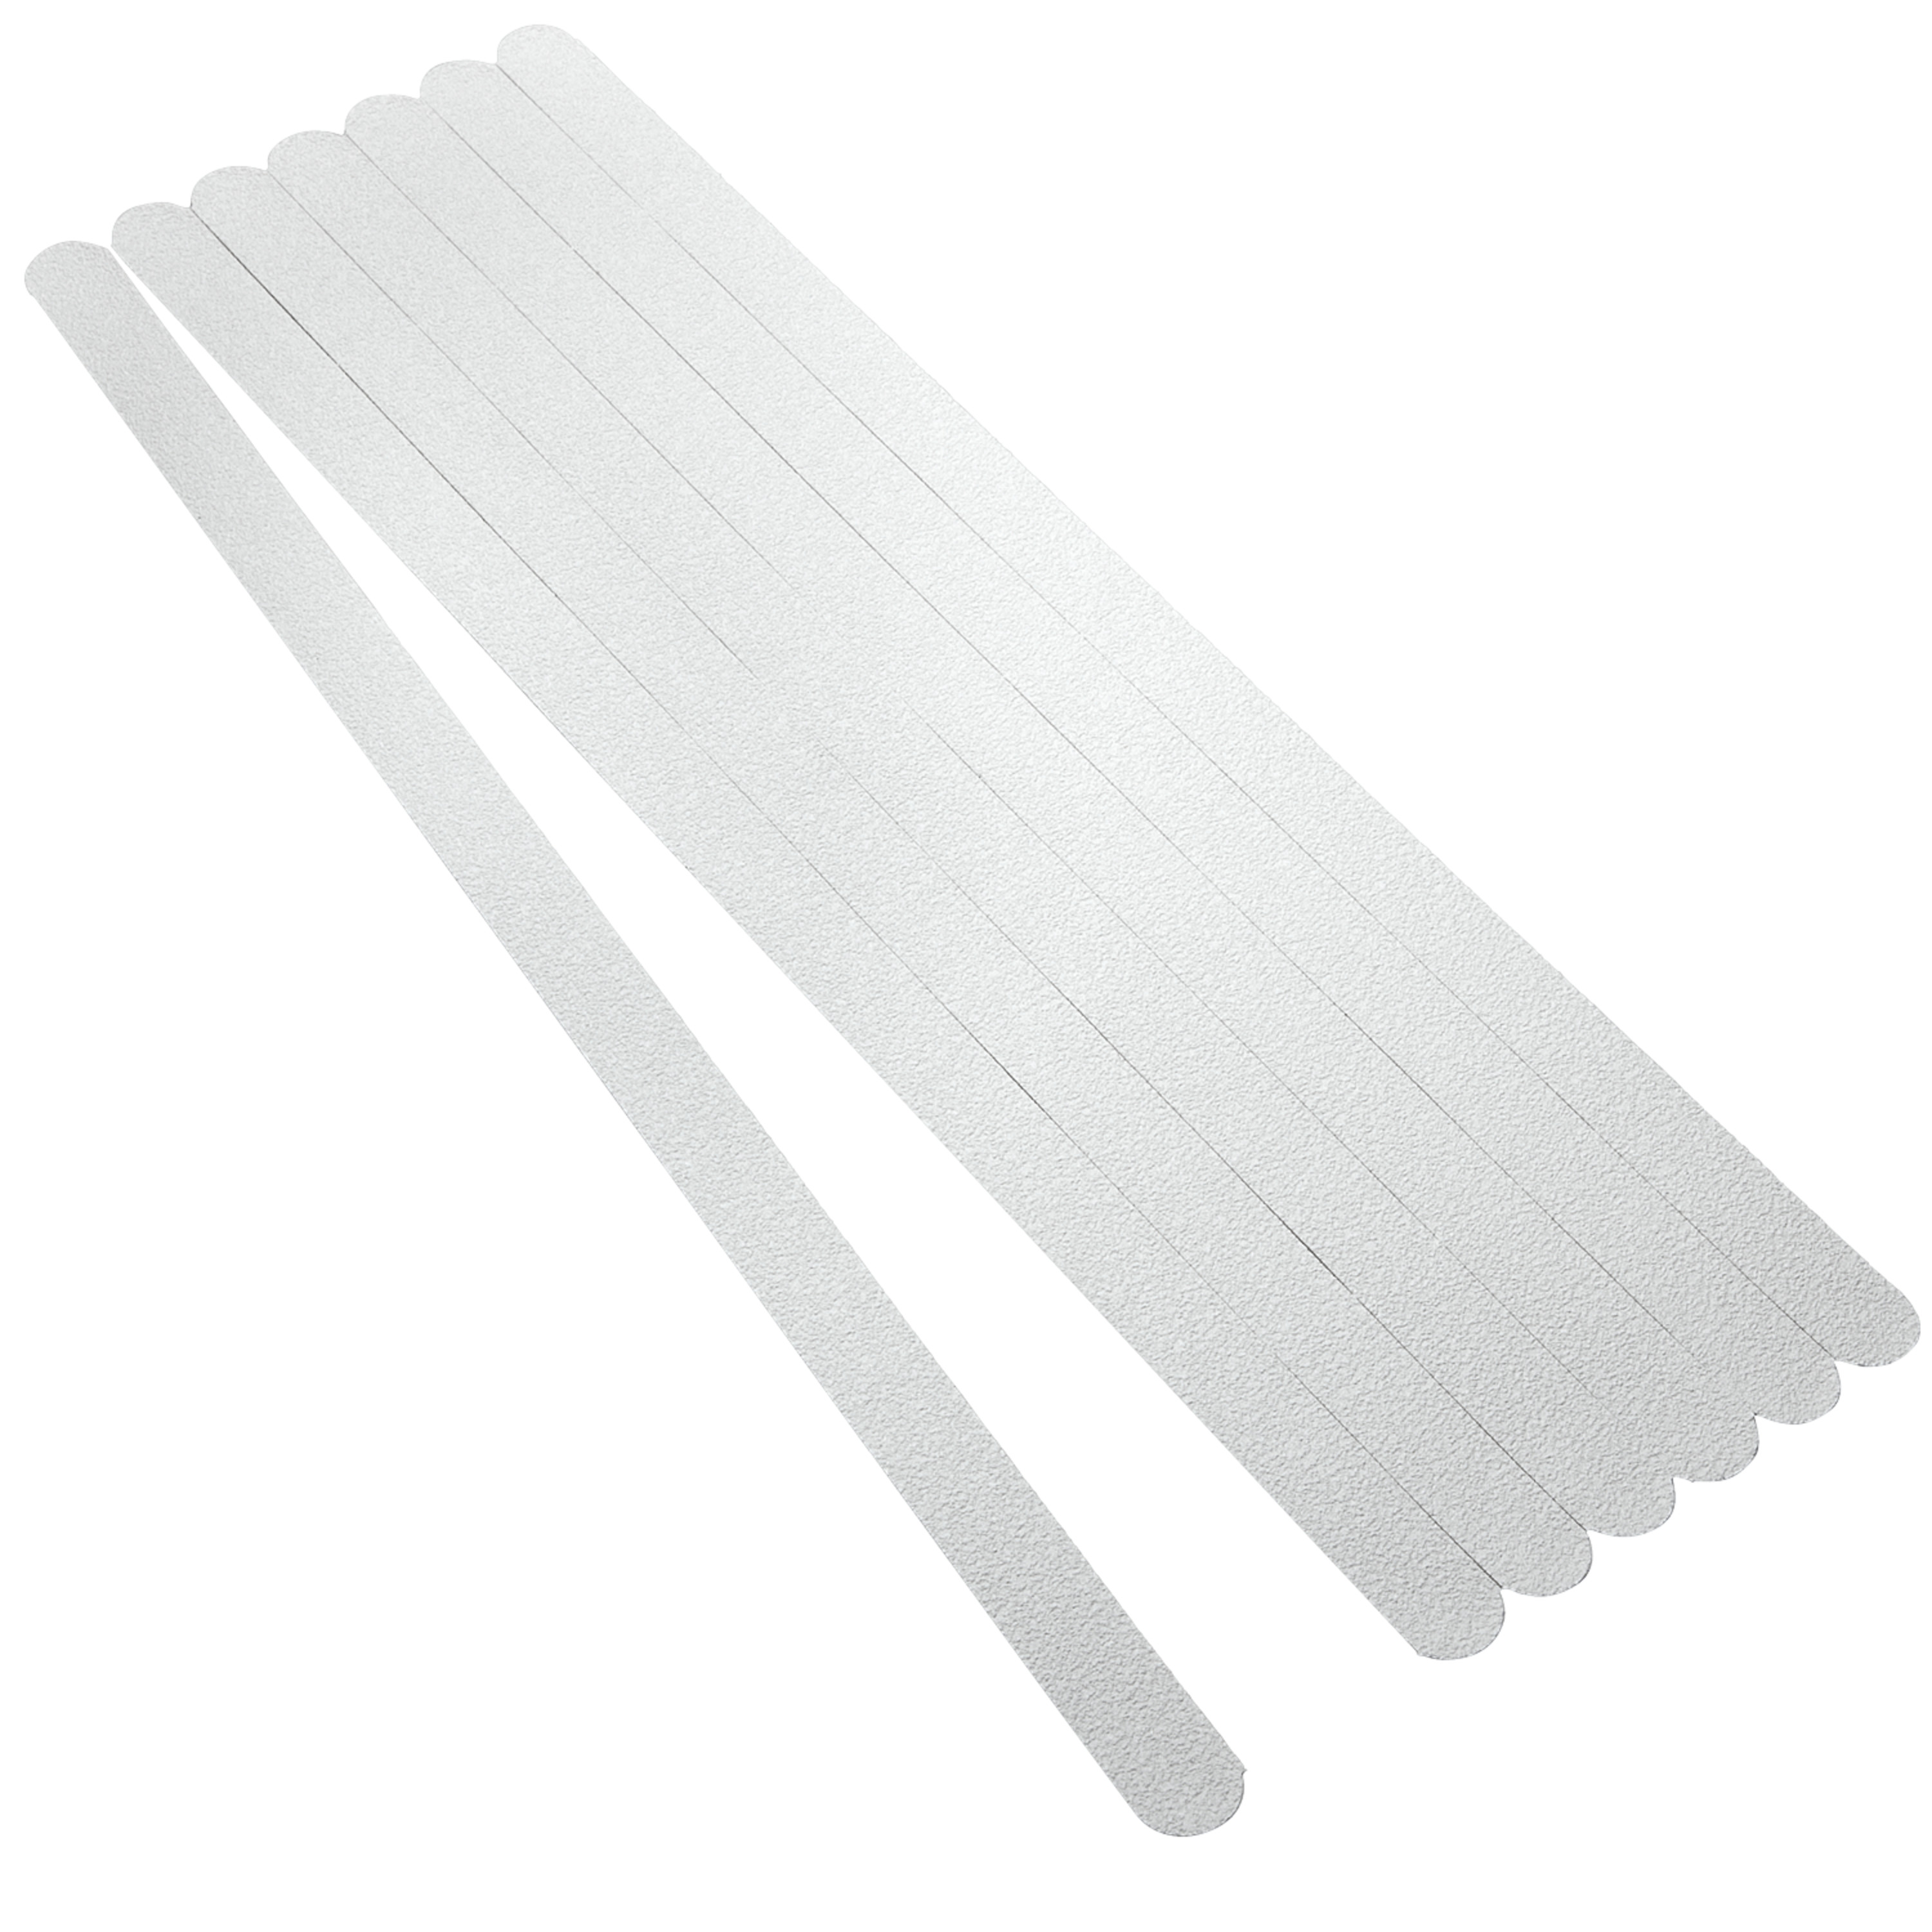 3M™ Safety-Walk™ Slip-Resistant Tub & Shower Strips 7705, White, 0.75 in
x 17 in, Strips, 400/Case